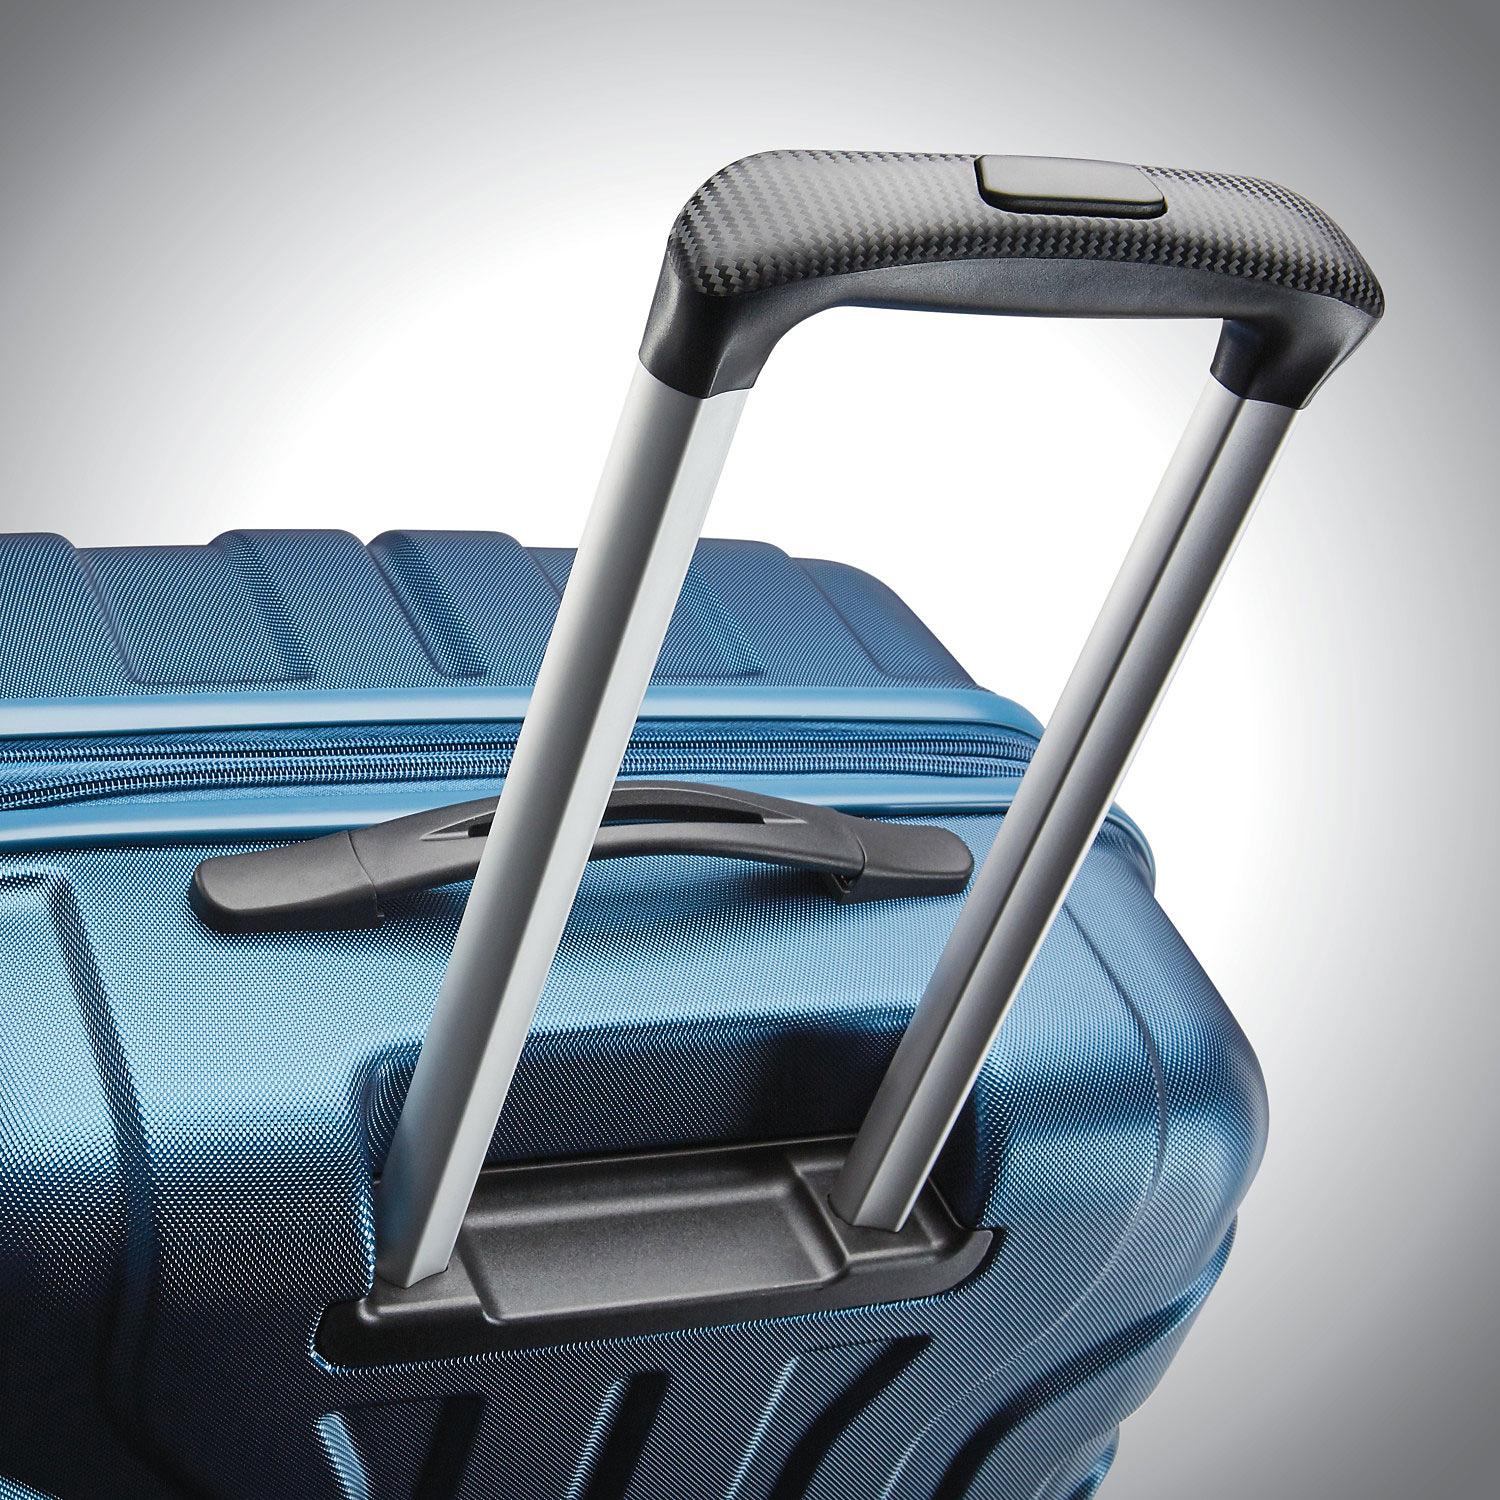 Samsonite Belmont DLX 2-Piece Hardside Luggage Set - Lagoon Blue | eBay